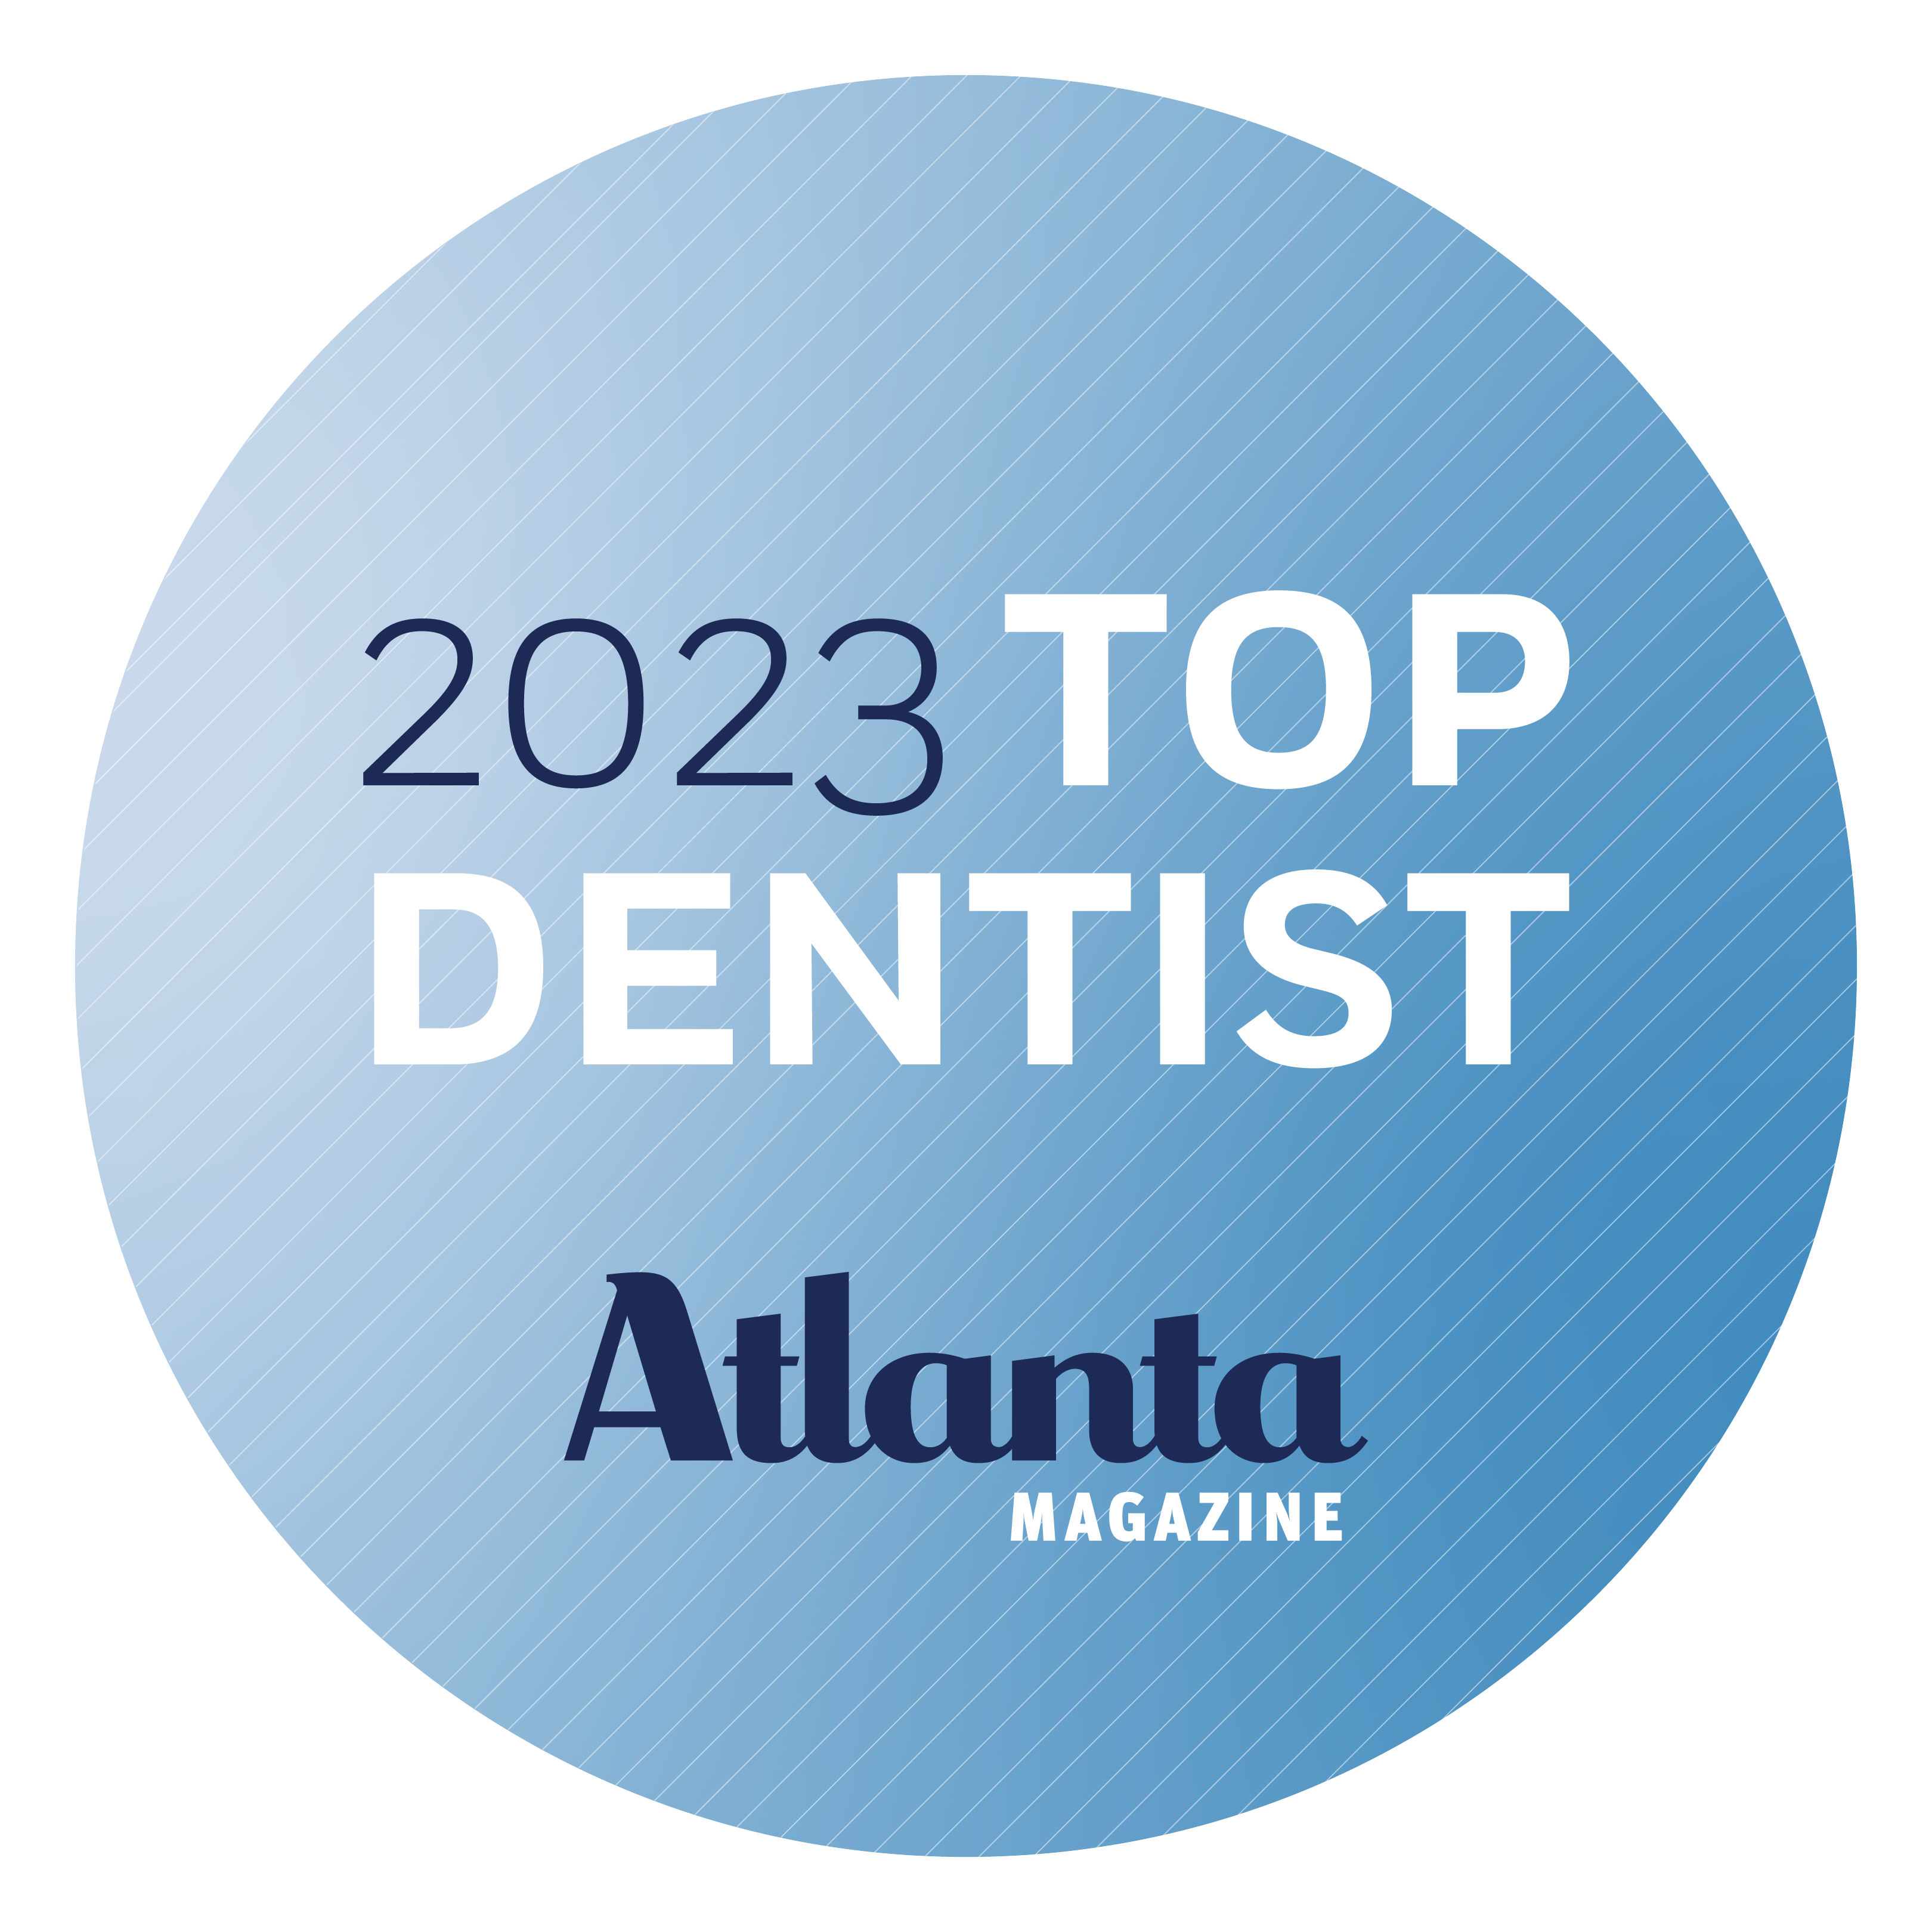 2023 Top Dentist Atlanta Magazine